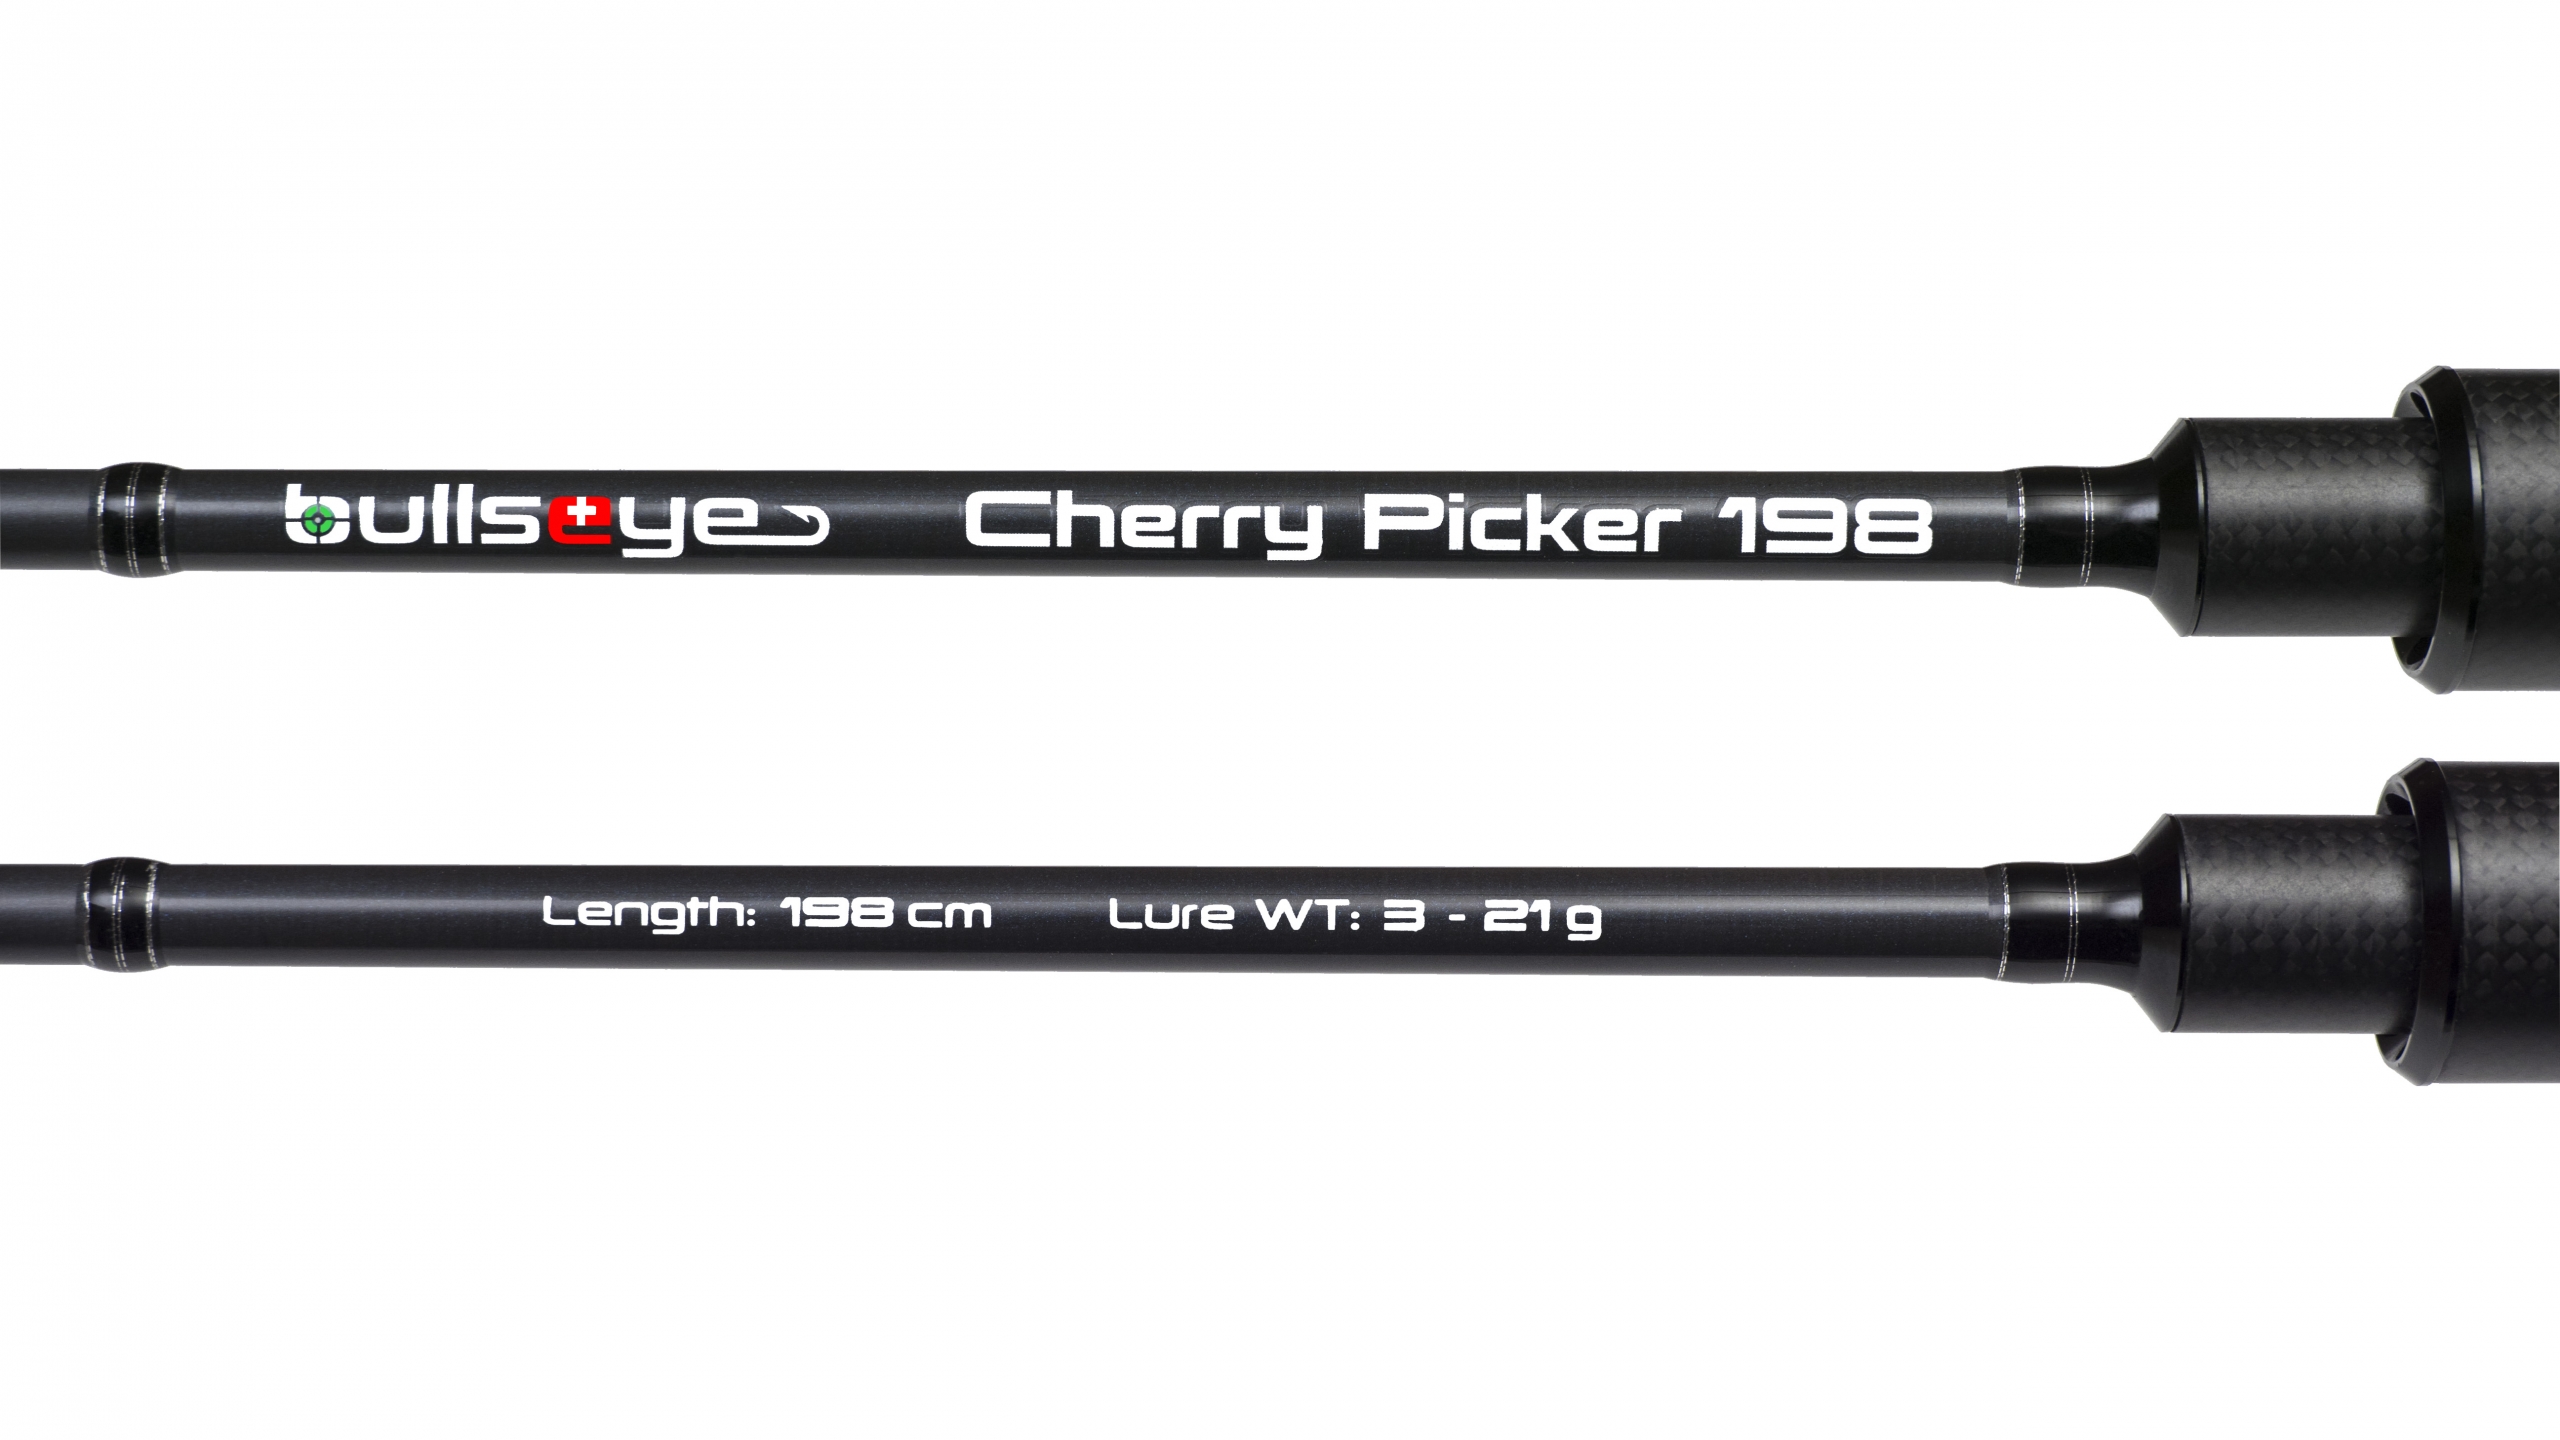 Cherry Picker C 198cm 3-21g		